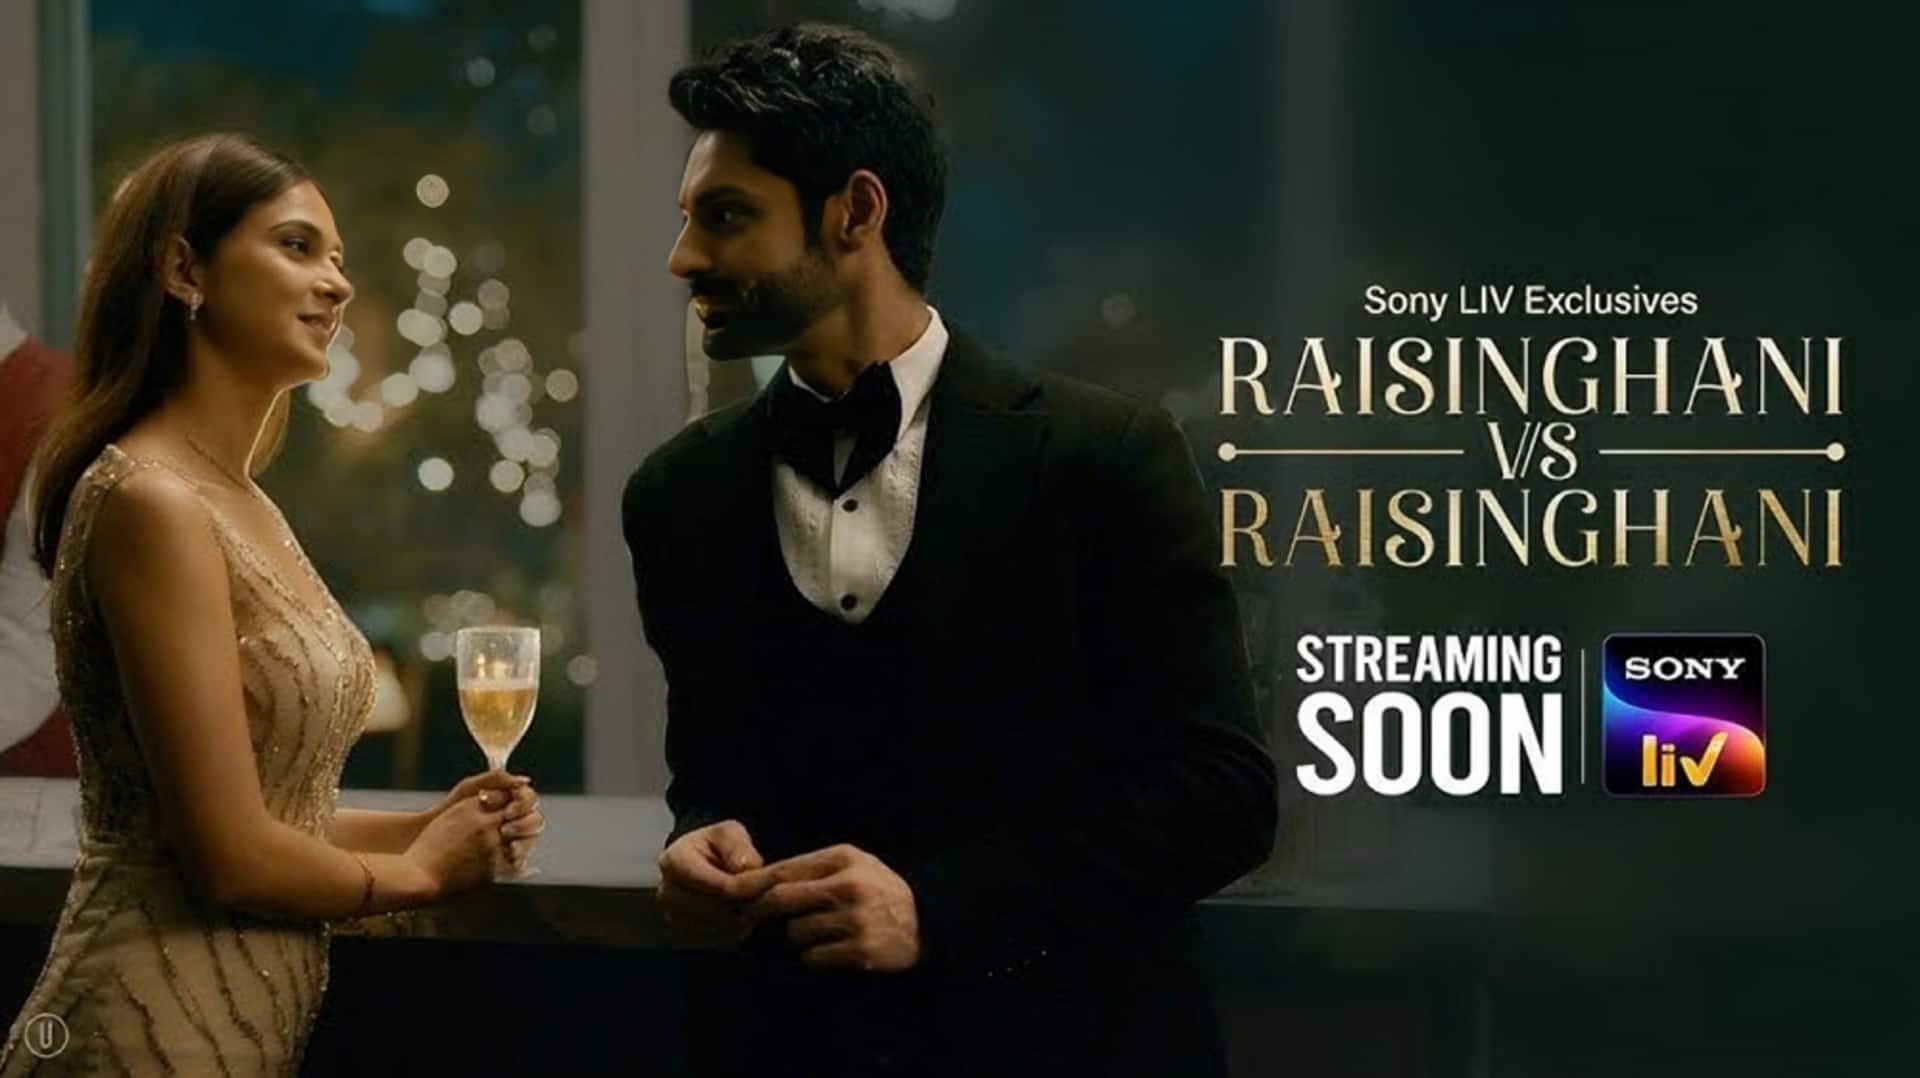 SonyLIV unveils first look of 'Raisinghani v/s Raisinghani'